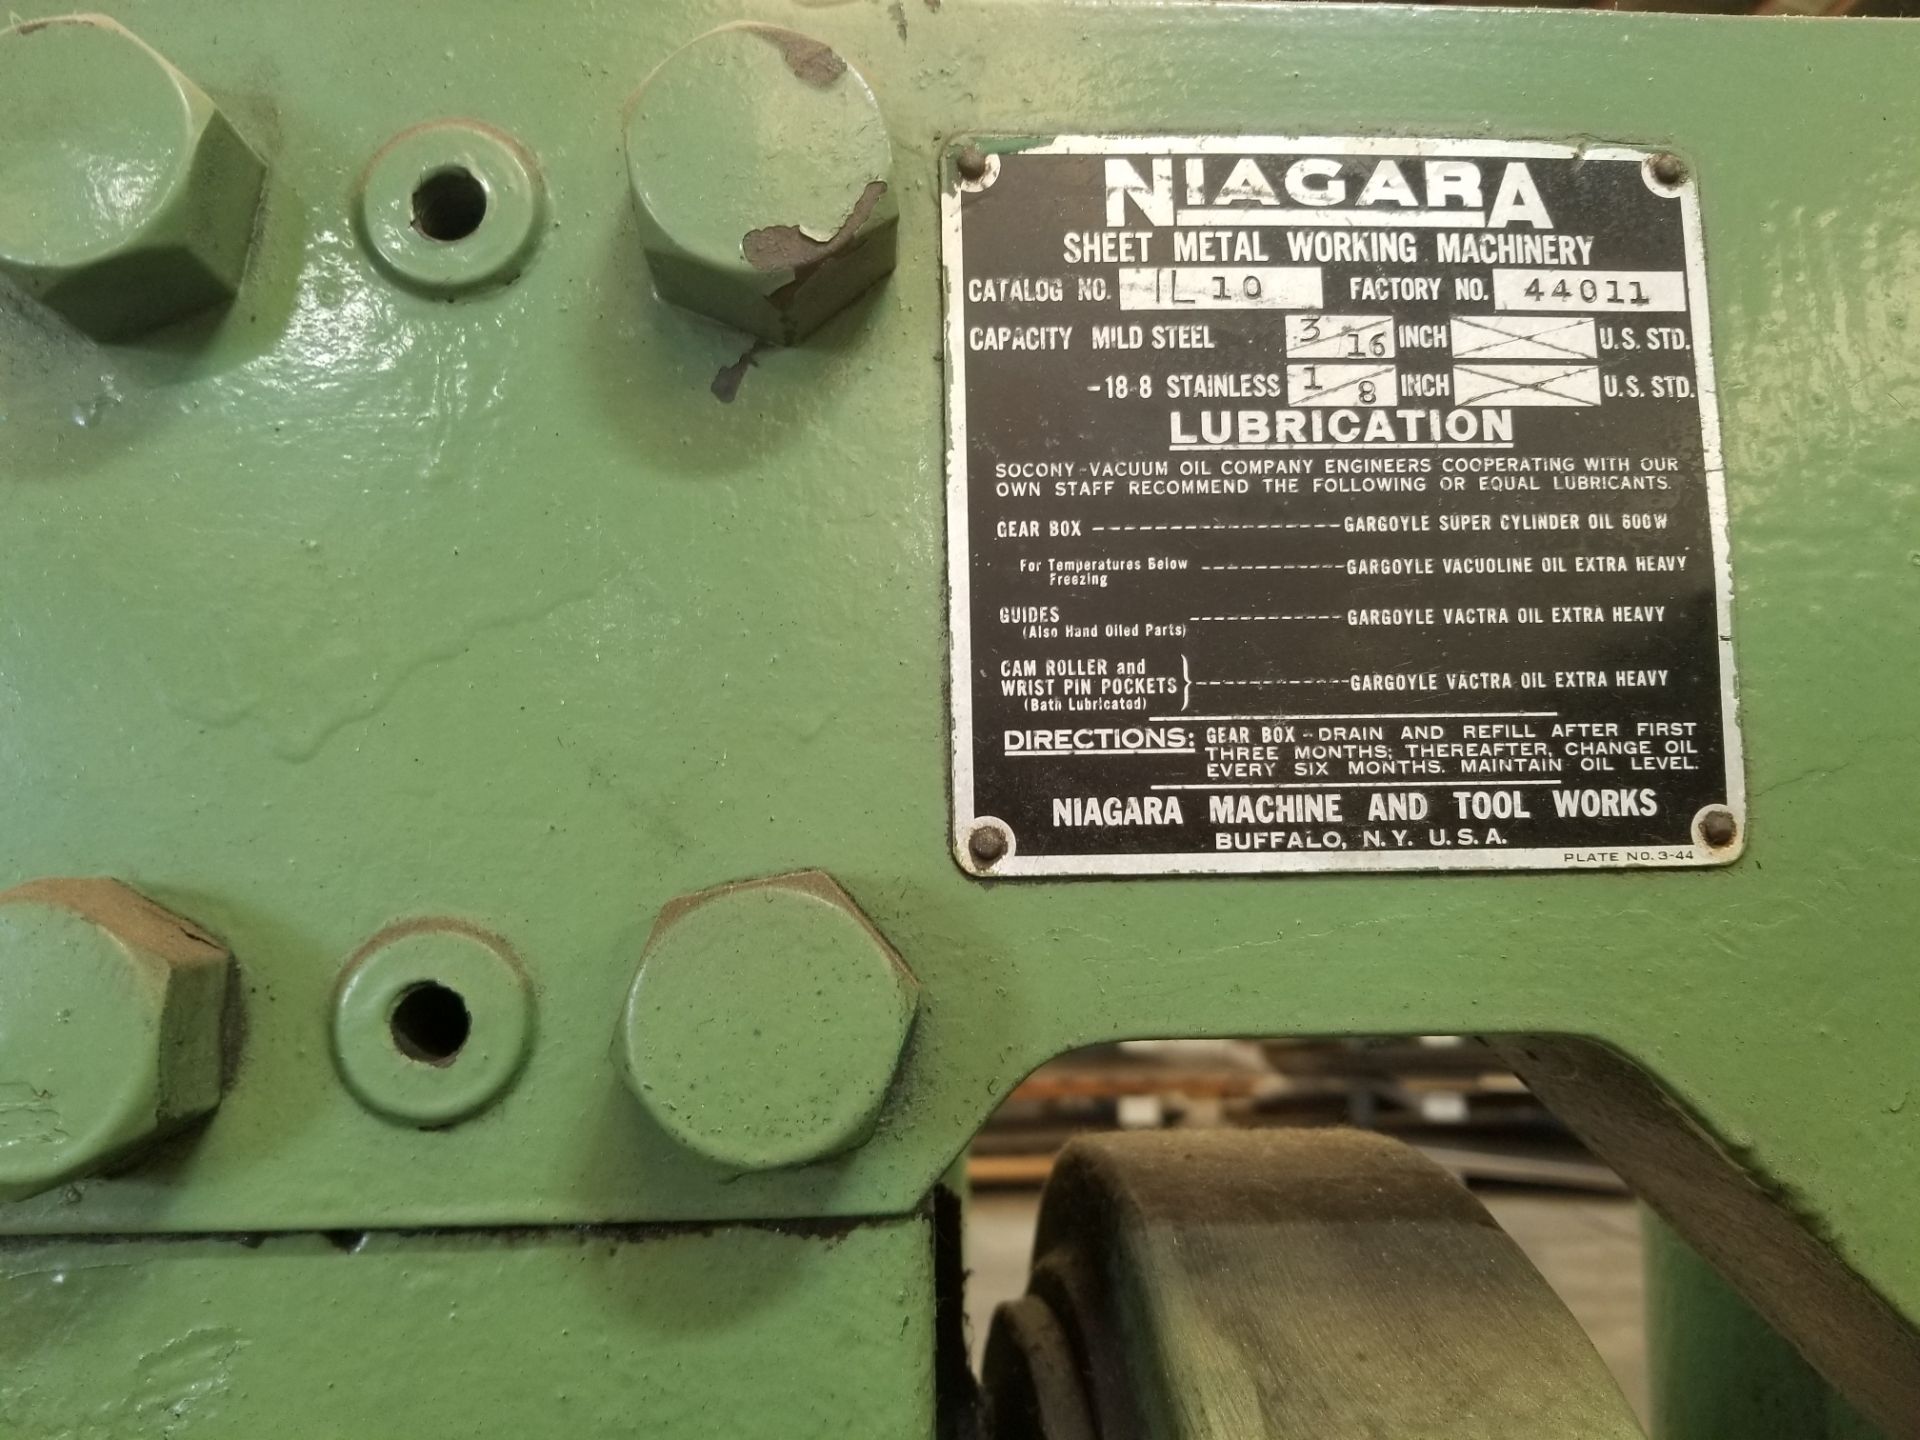 Niagara IL10 3/16” x 10’ Deep Throat Power Shear s/n 44011 w/ Dial Back Gauge, Squaring Arm - Image 4 of 4